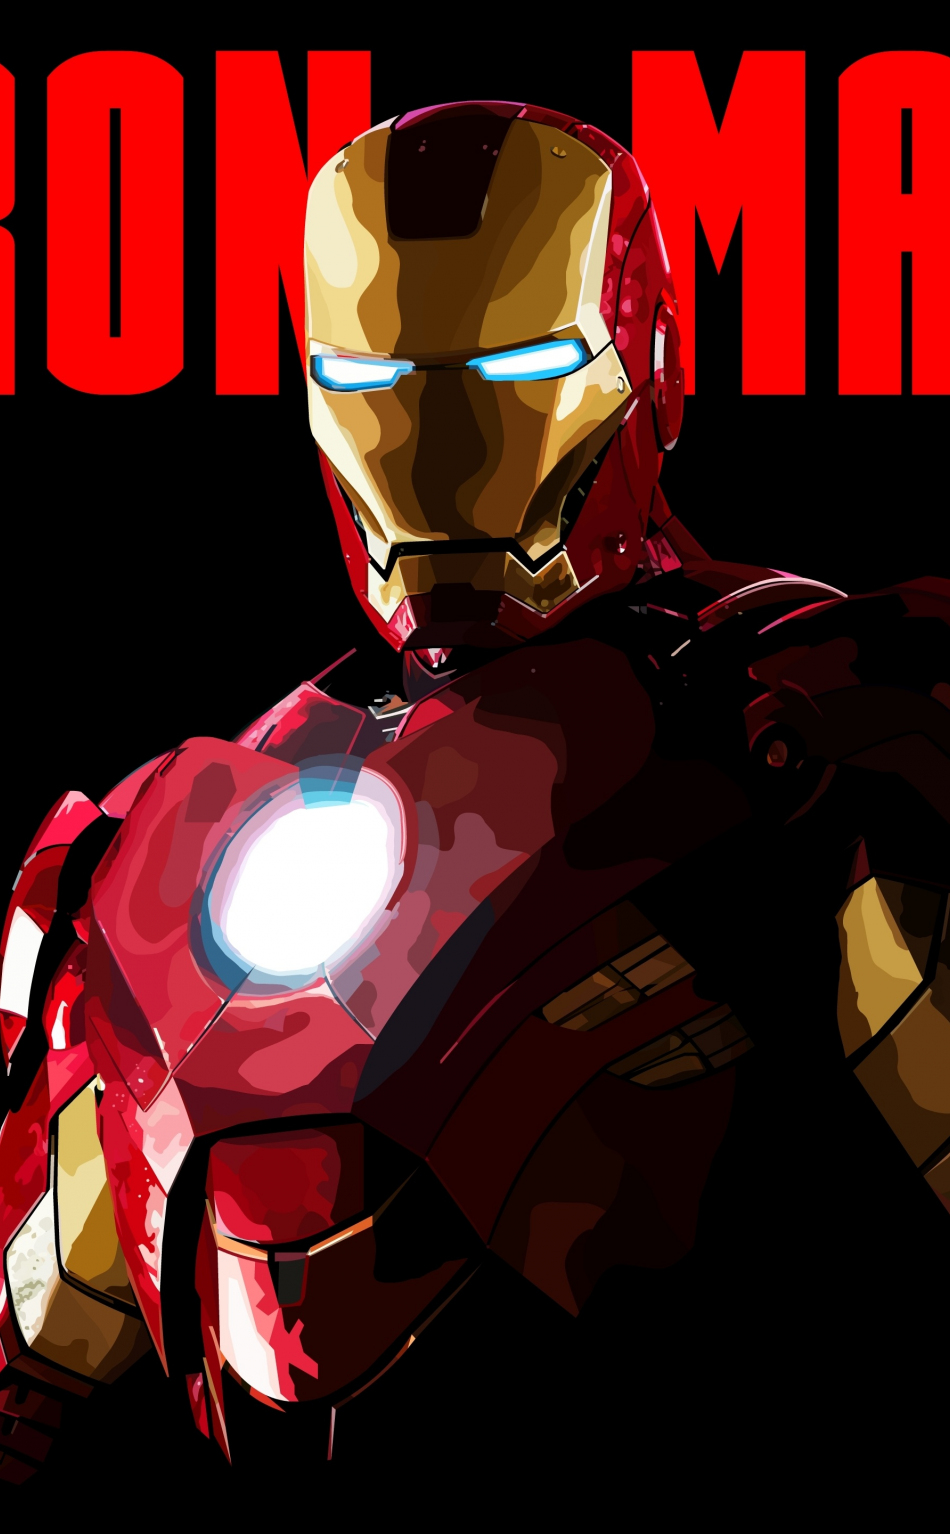 Download Wallpaper 950x1534 Iron Man Fan Art Superhero Iphone 950x1534 Hd Background 9793 6771